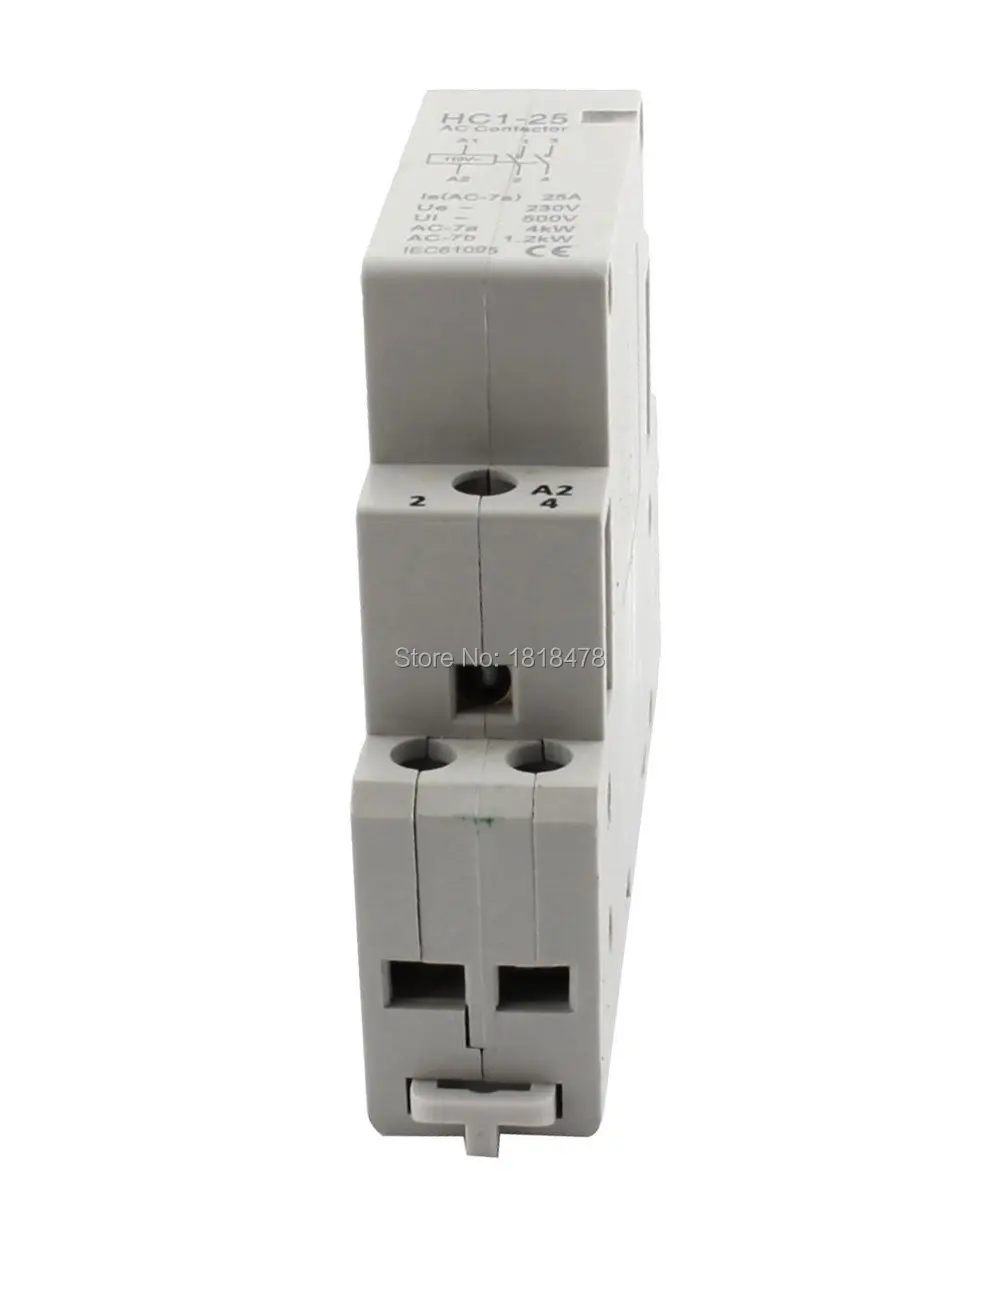 Baomain AC Contactor HC1-25 110V 25A 2 Pole Universal Circuit Control 